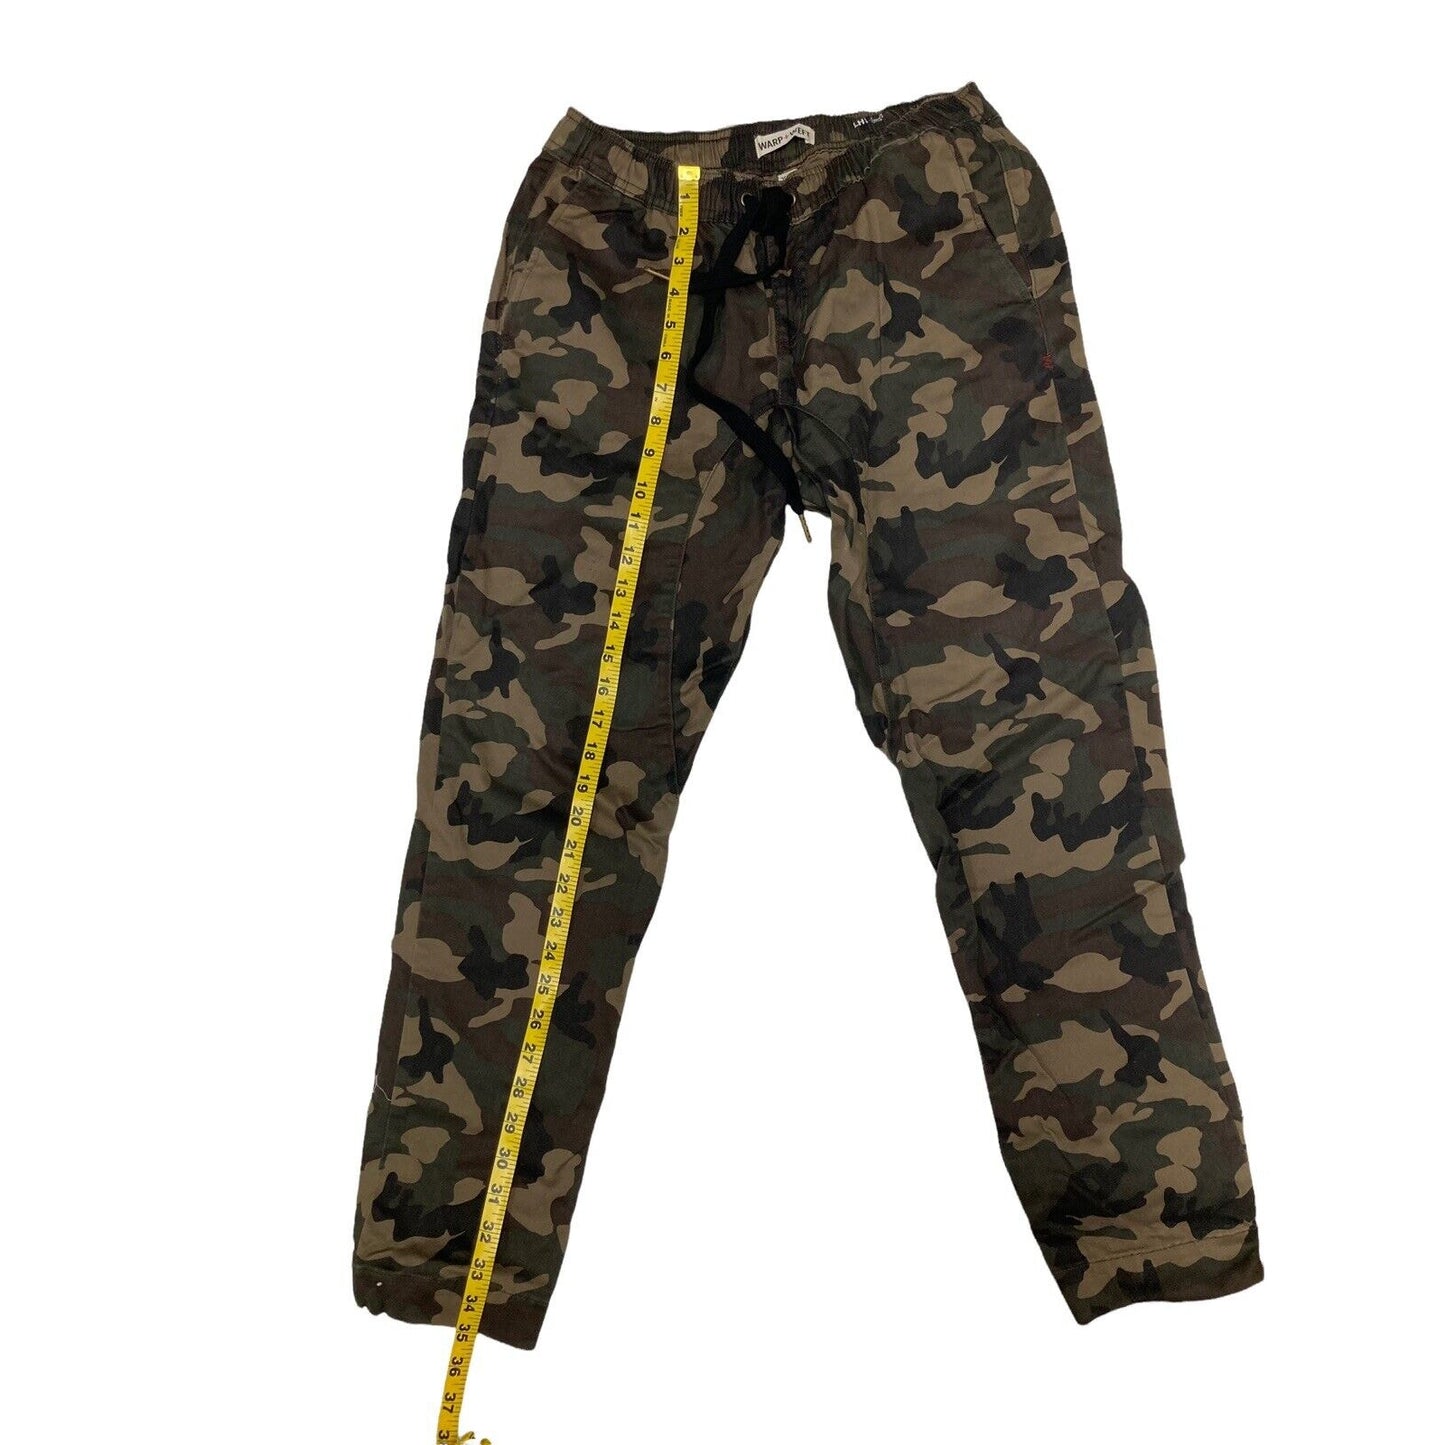 Warp + Weft LHR London Jogger Camouflage Camo Pants Size 26